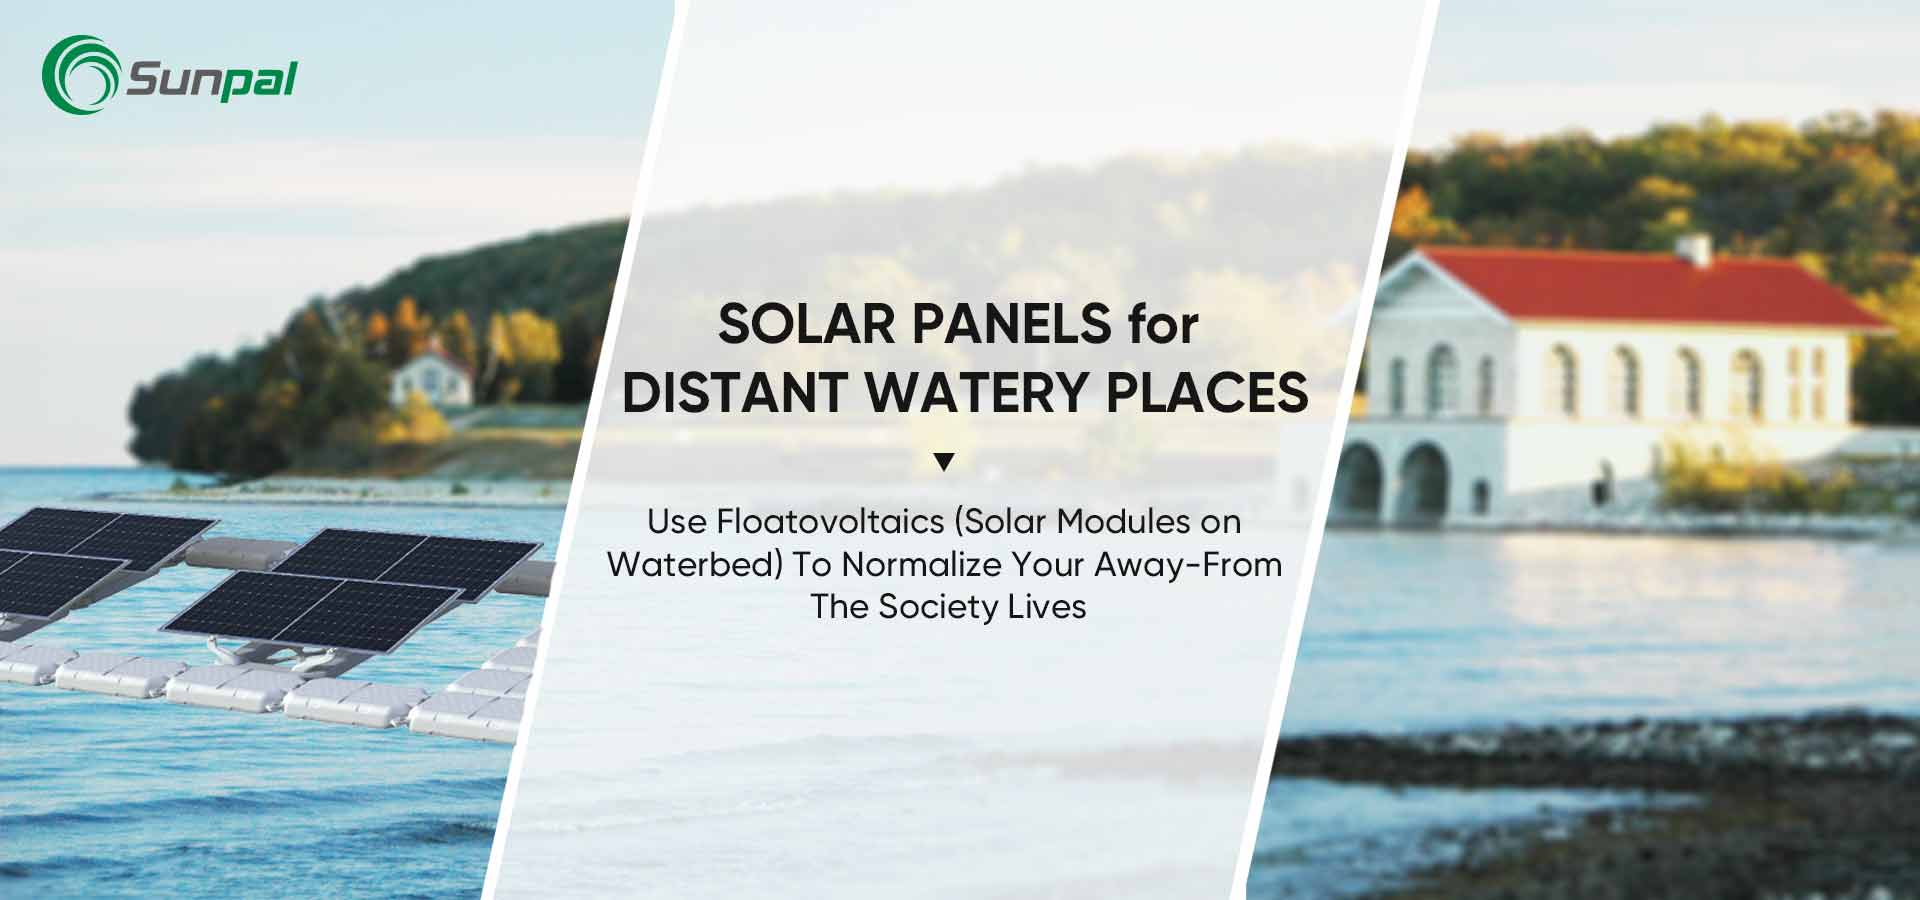 Solarmodule für netzunabhängige Orte: Floatovoltaik erklärt